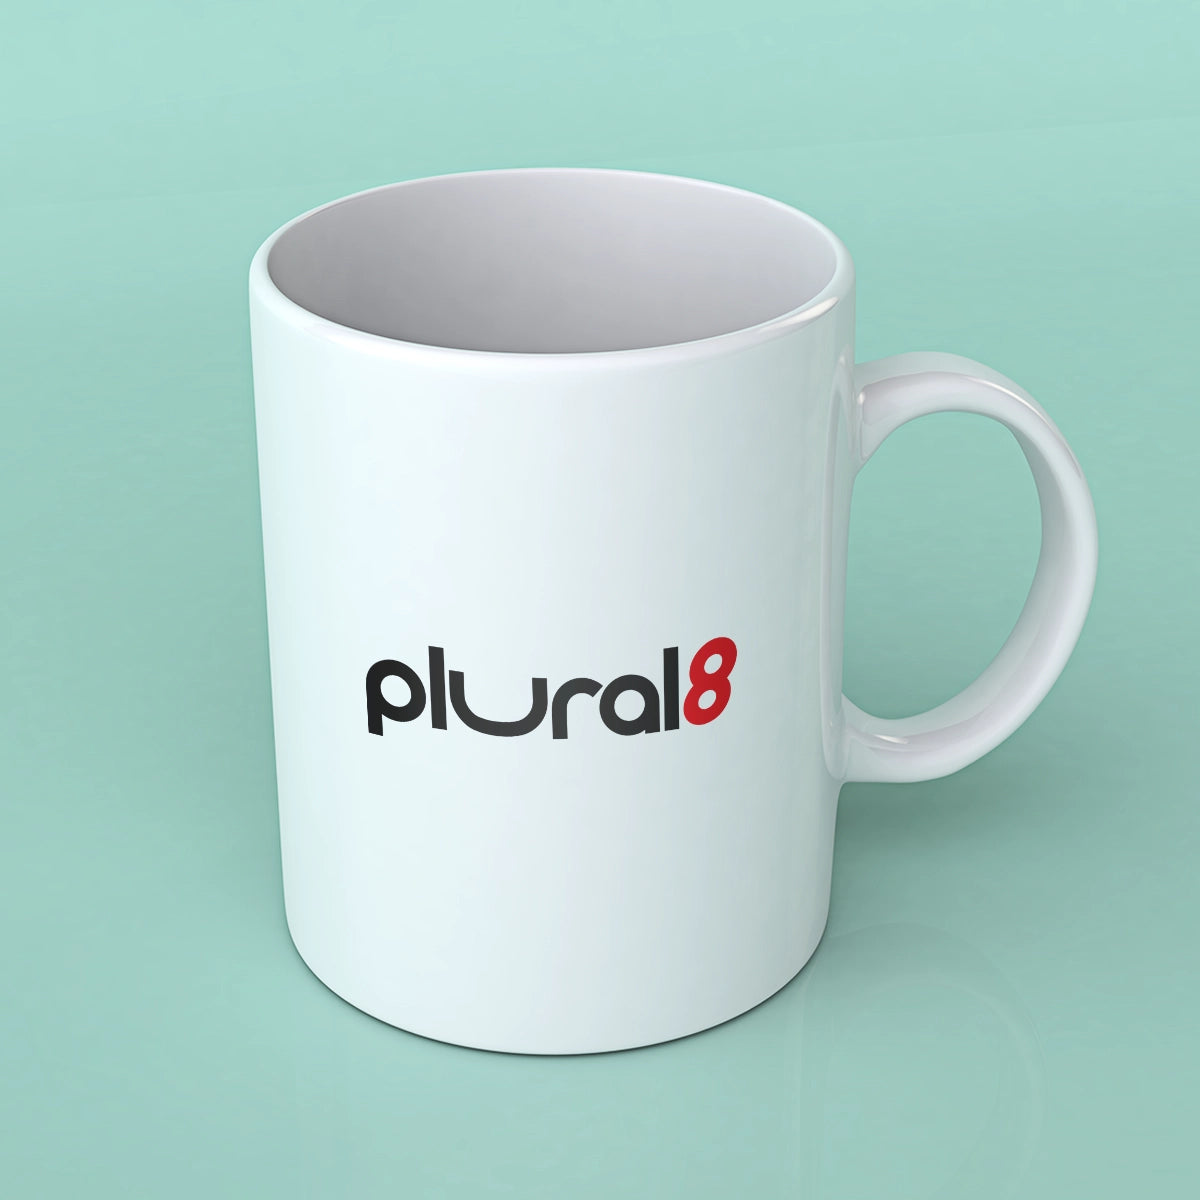 plural8.com